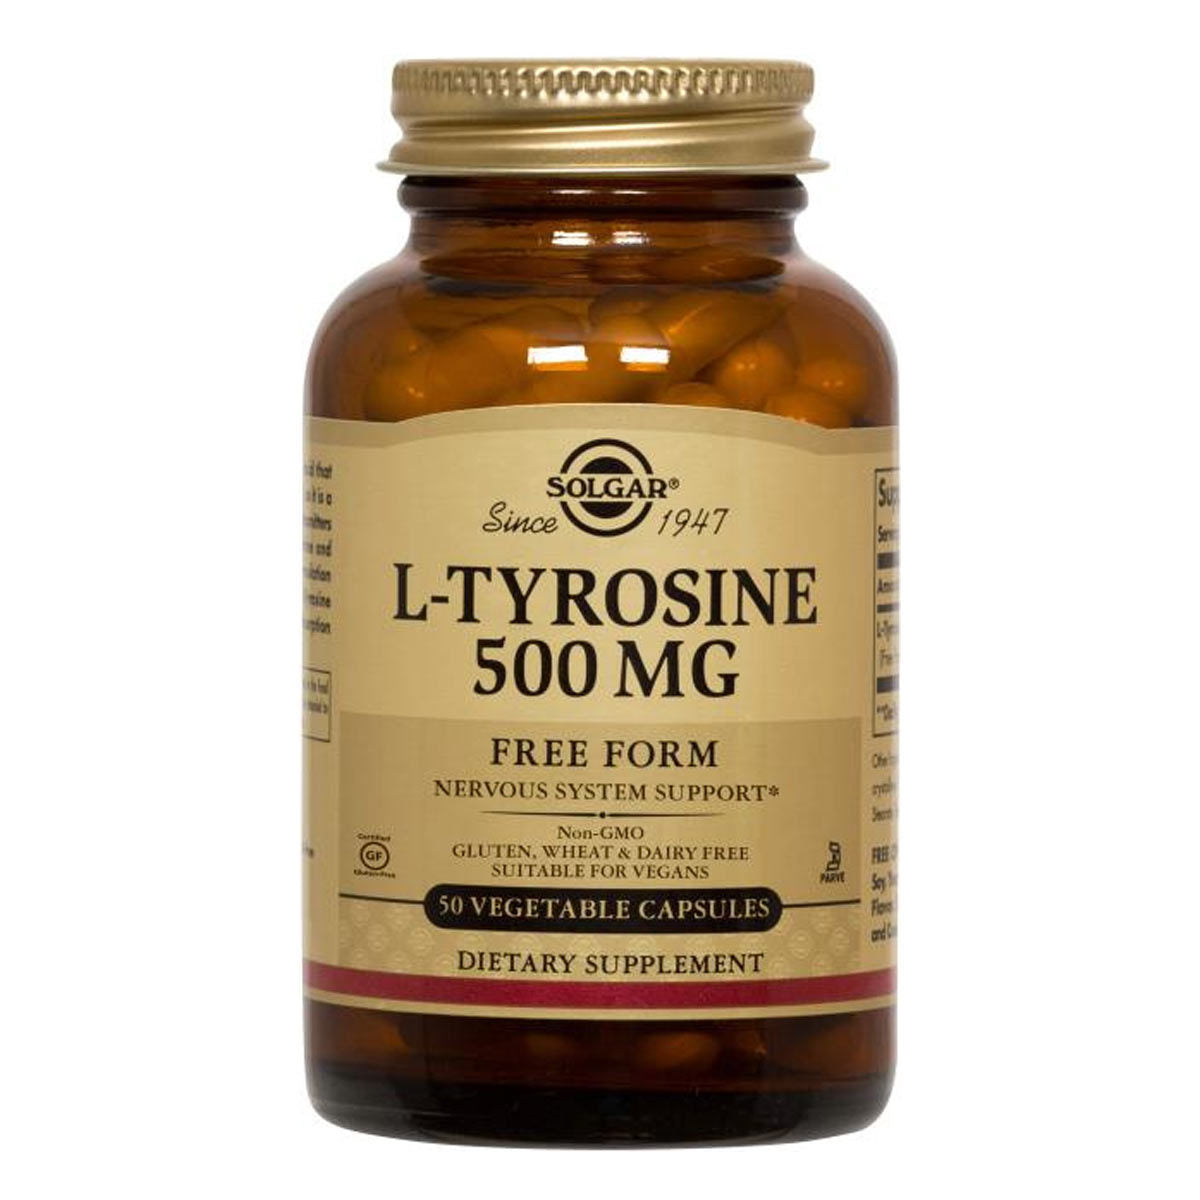 Primary image of L-Tyrosine